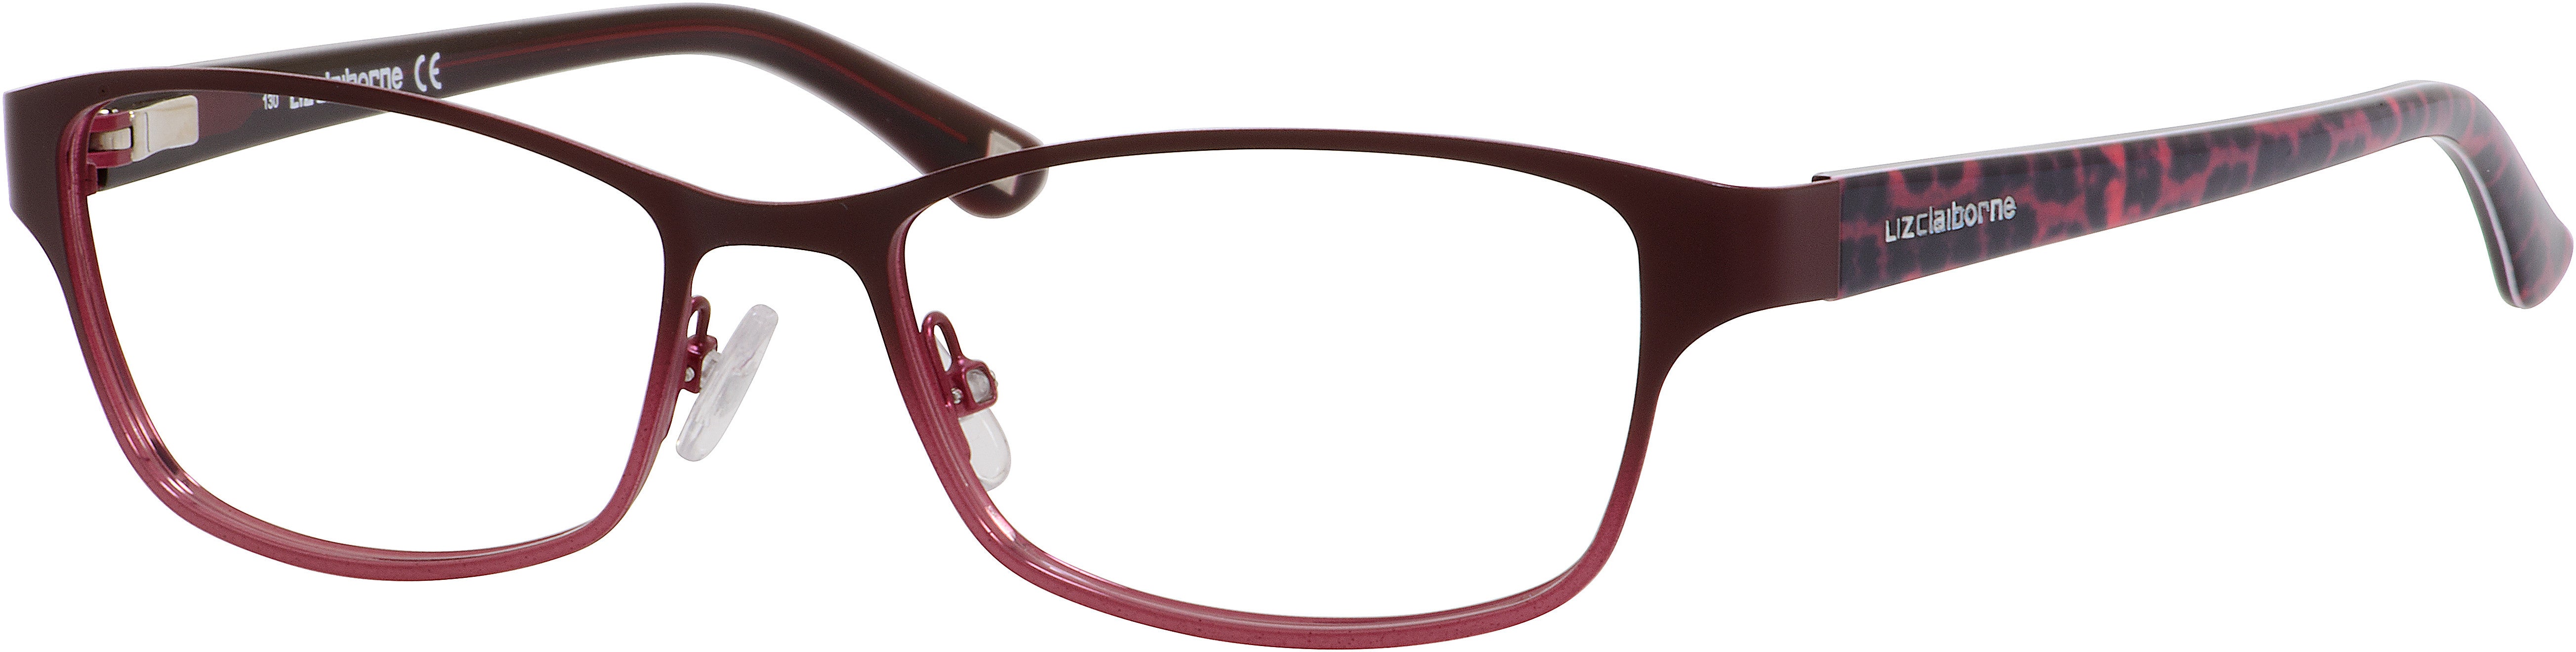  Liz Claiborne 614 Rectangular Eyeglasses 0DV7-0DV7  Burgundy Fade (00 Demo Lens)